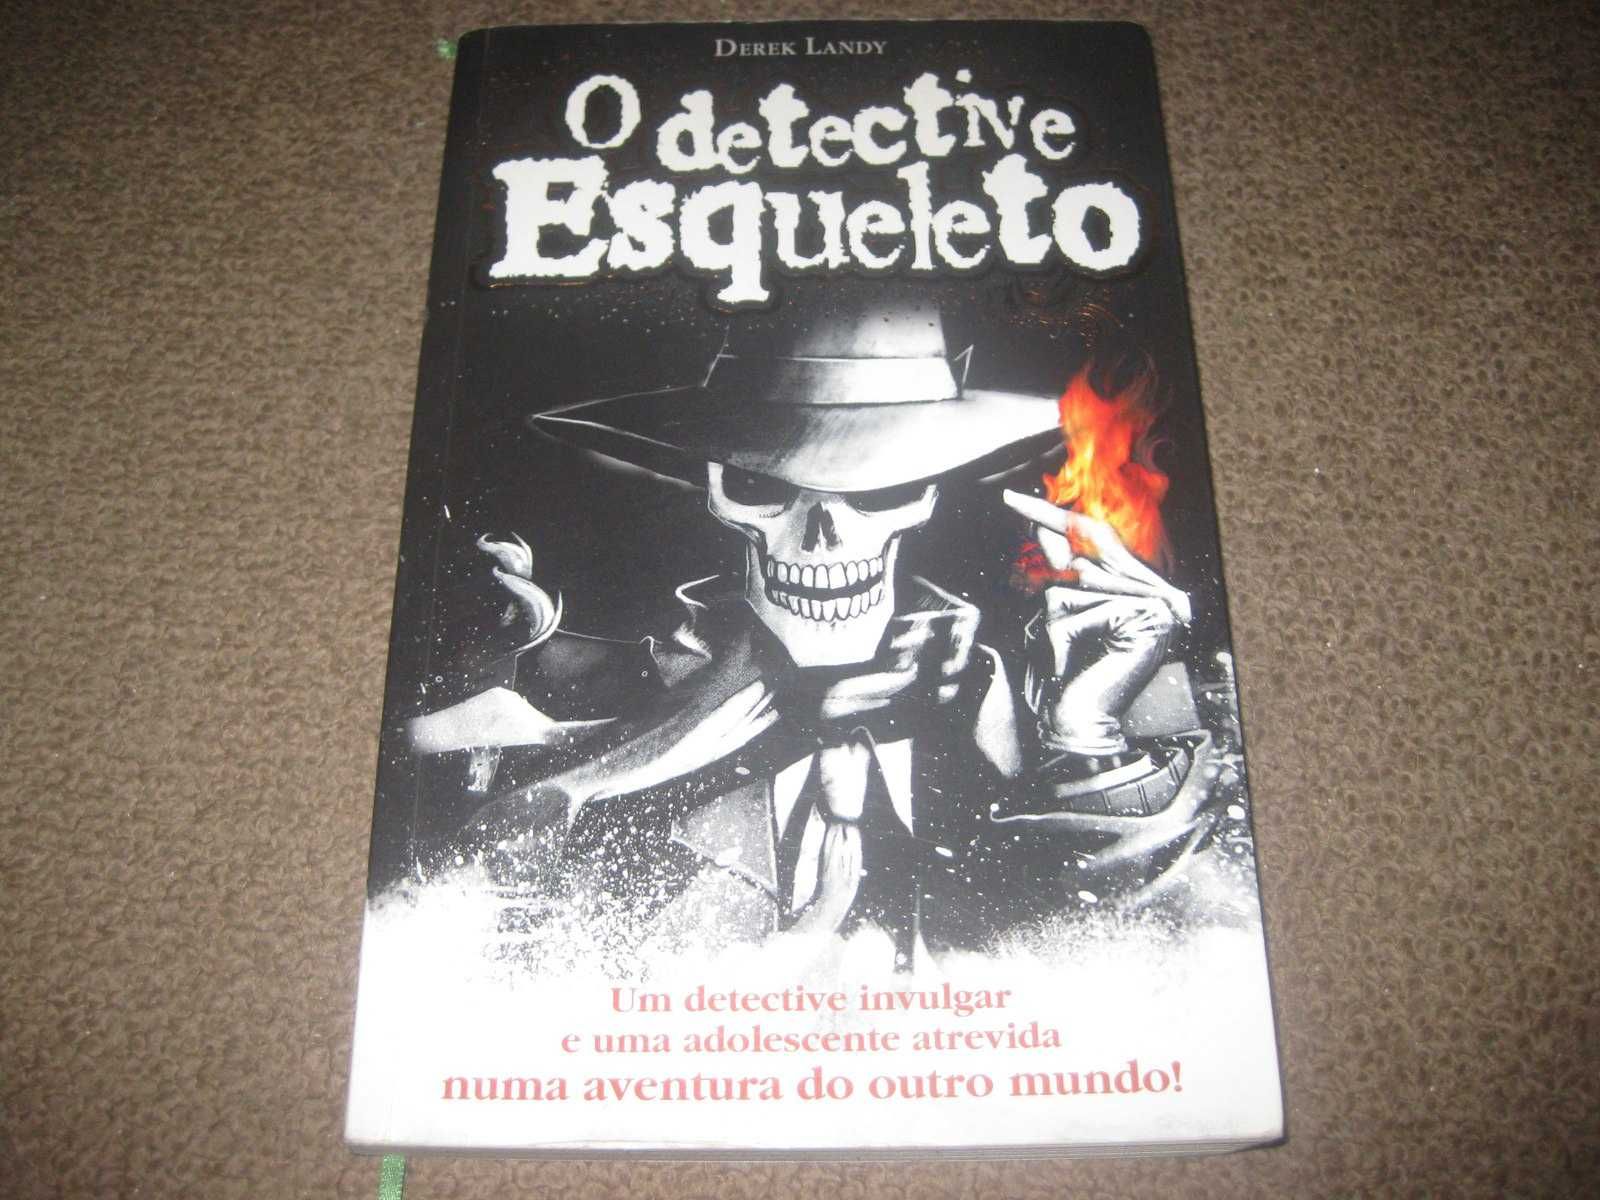 Livro "O Detective Esqueleto" de Derek Landy